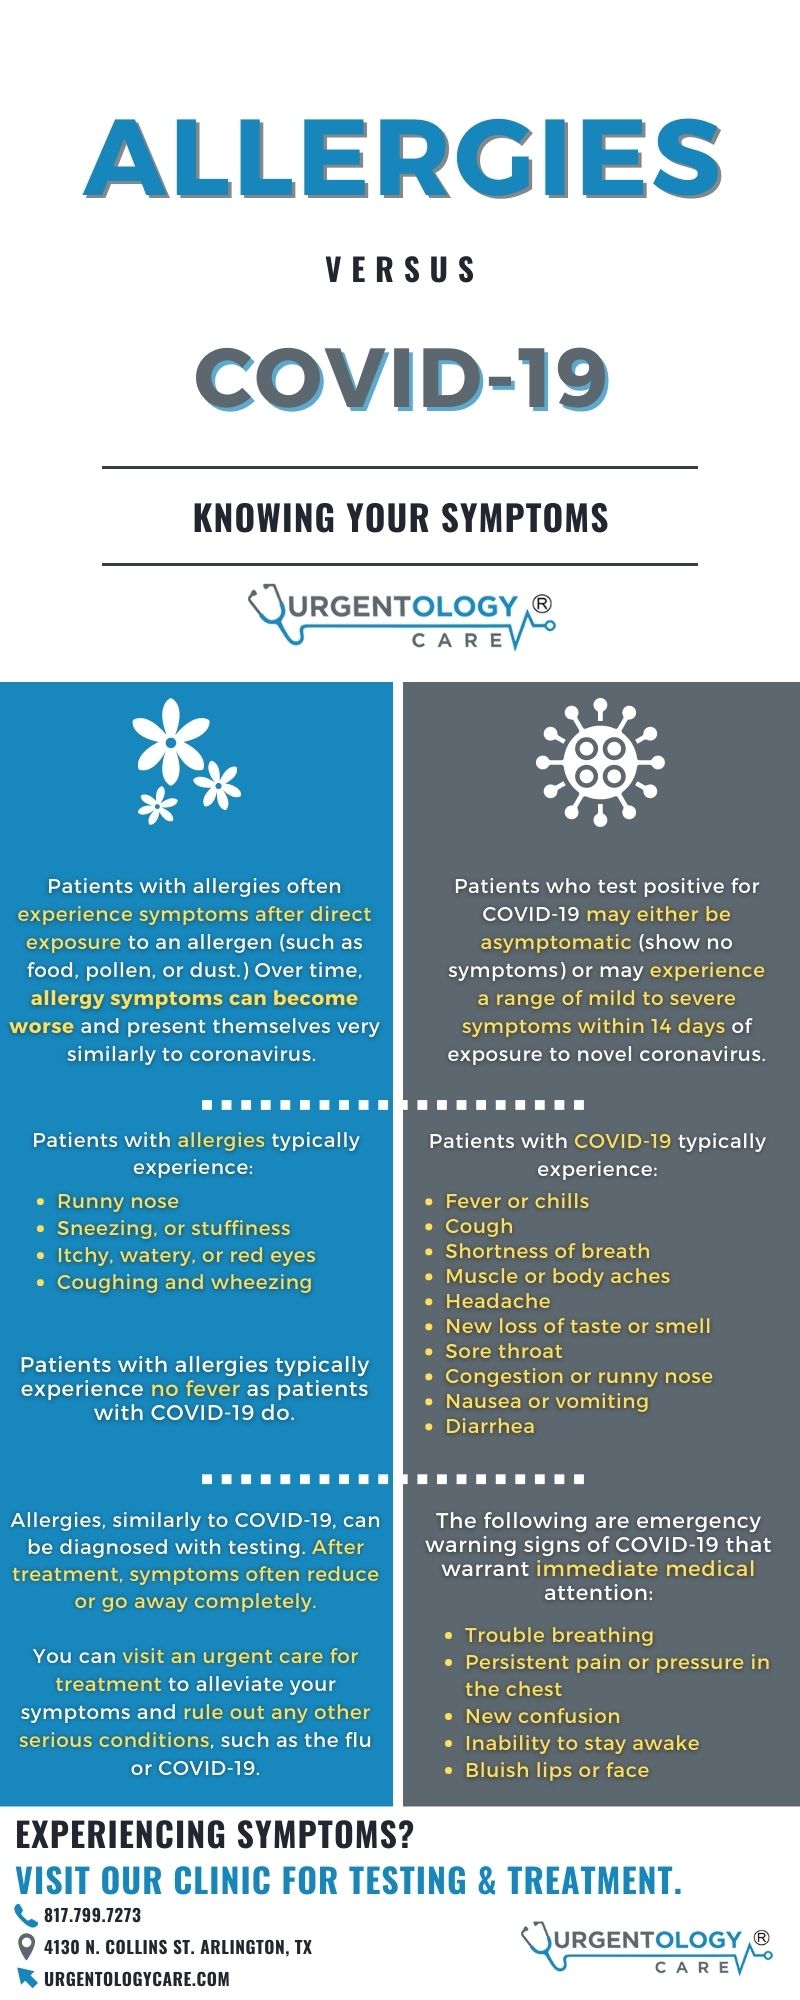 Urgentology Care Allergies vs. COVID 19